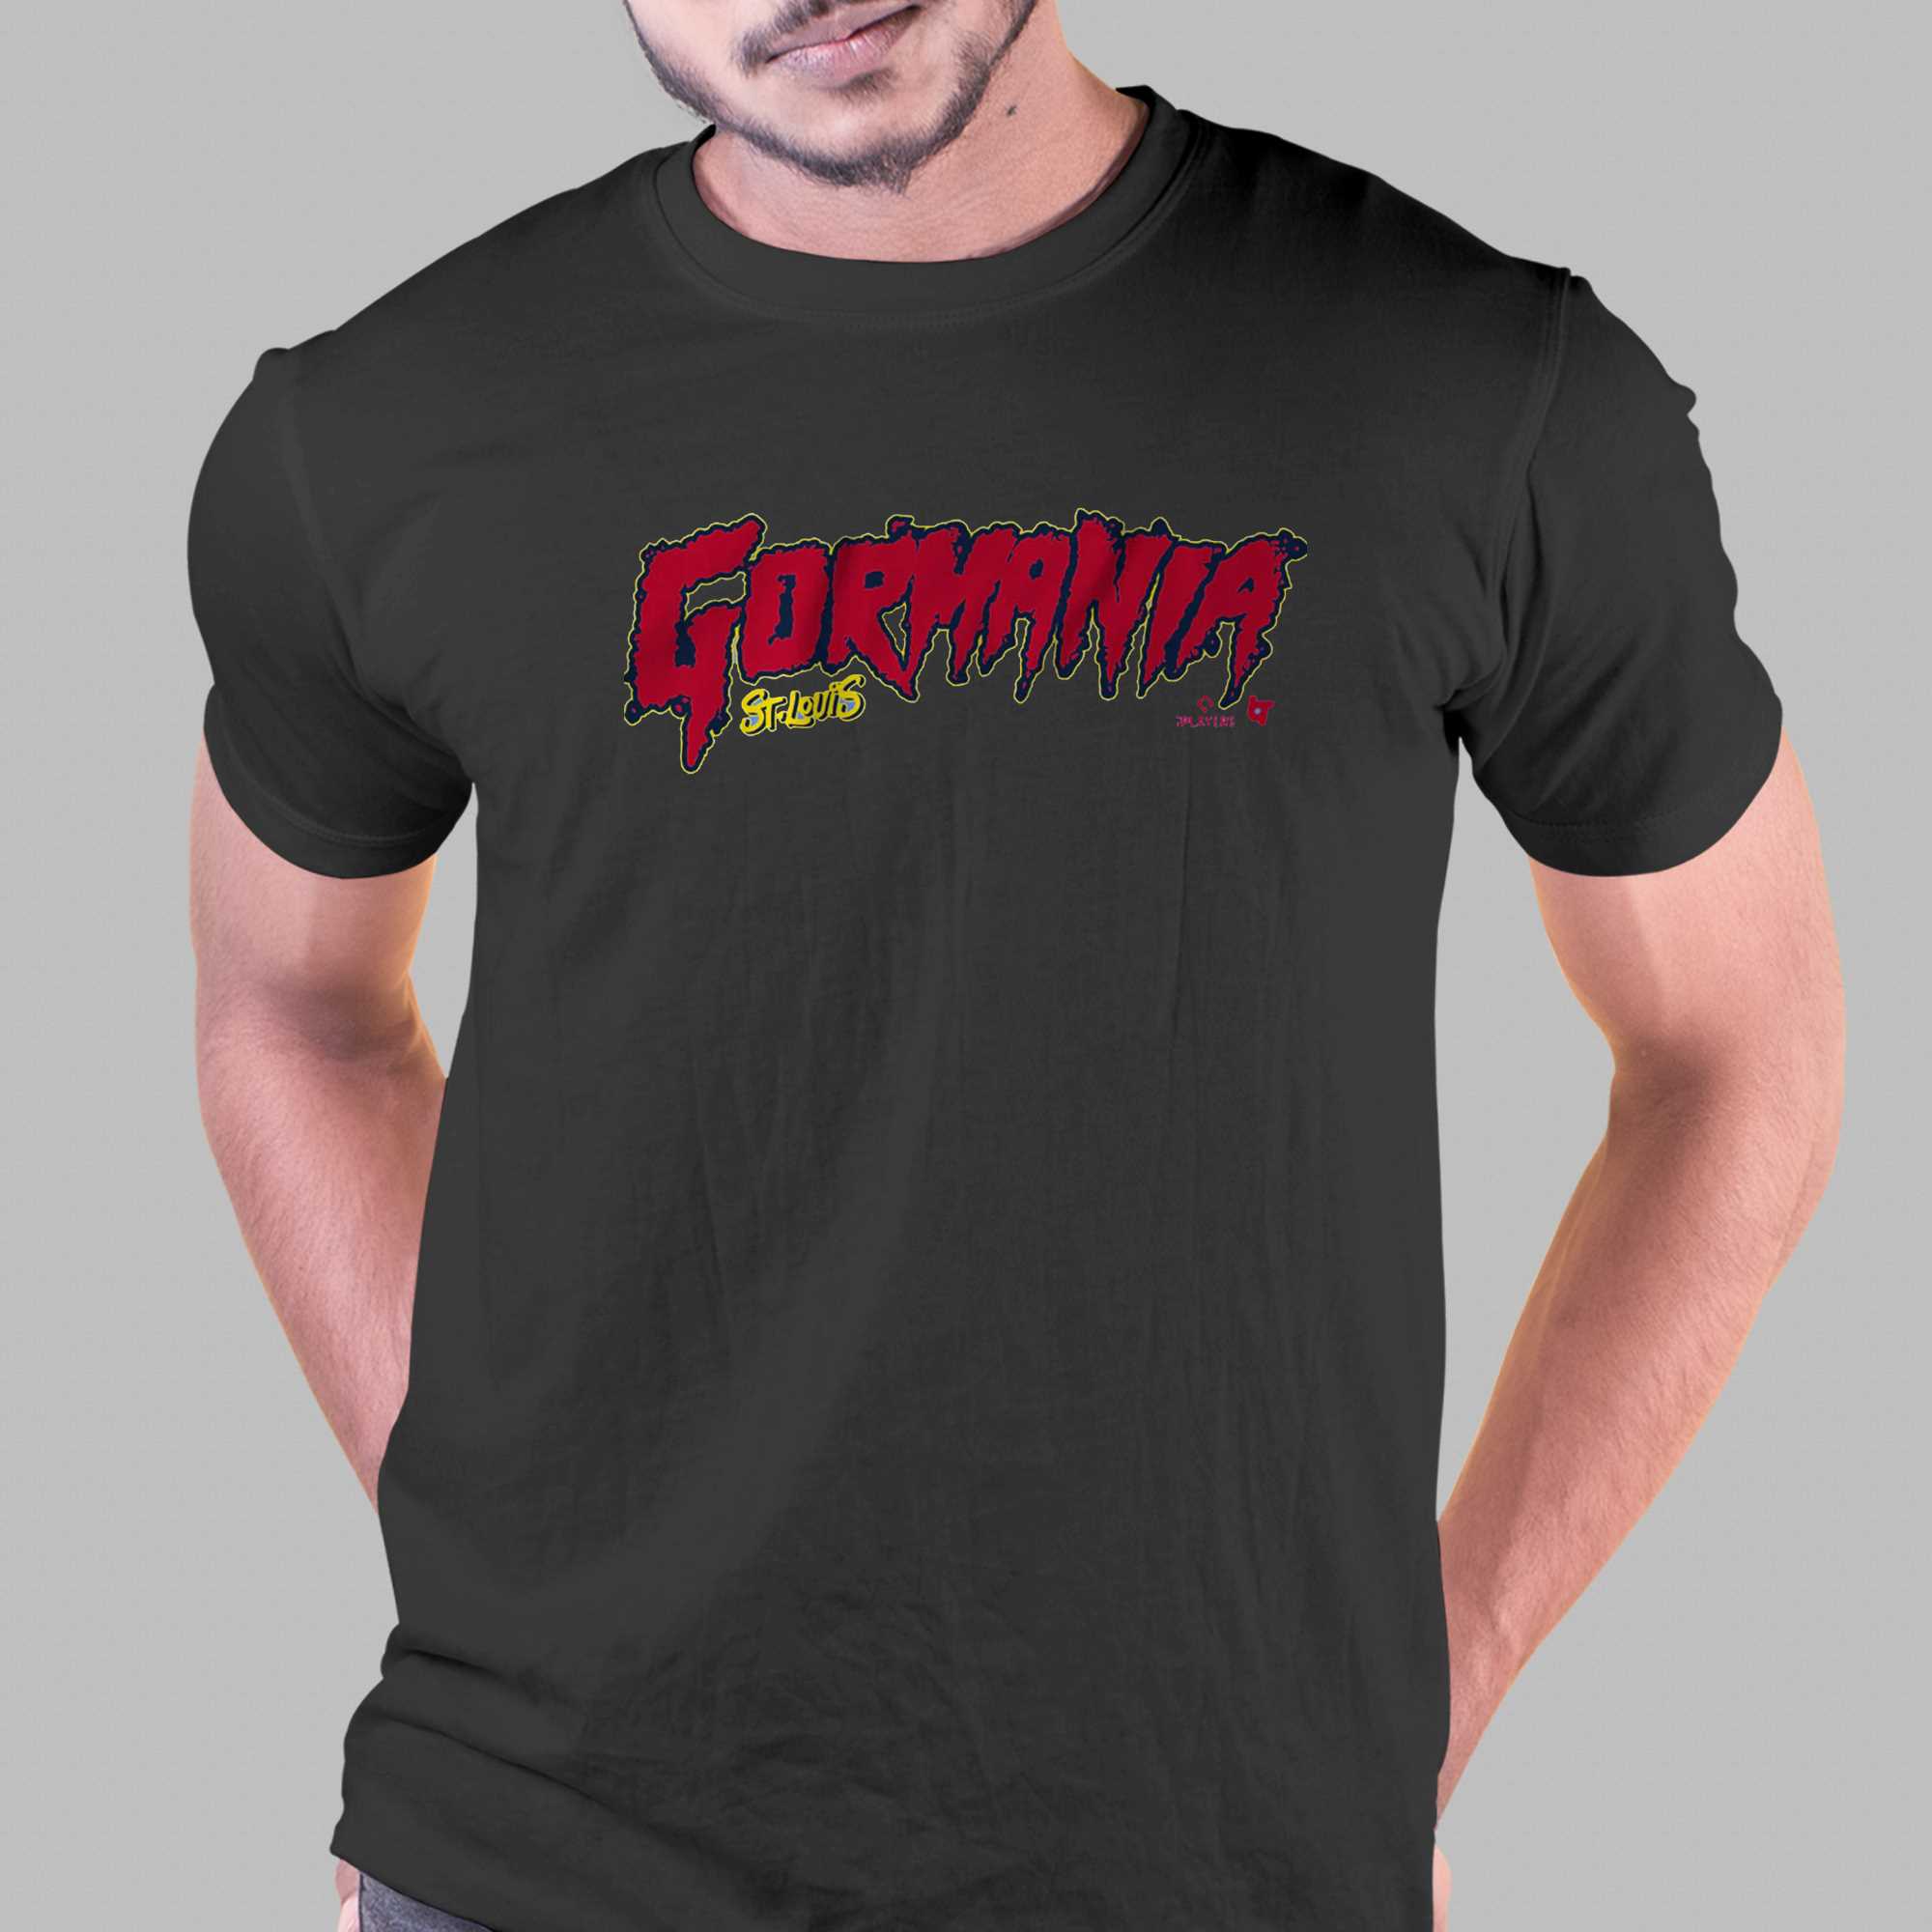 Nolan Gorman Gormania T-shirt